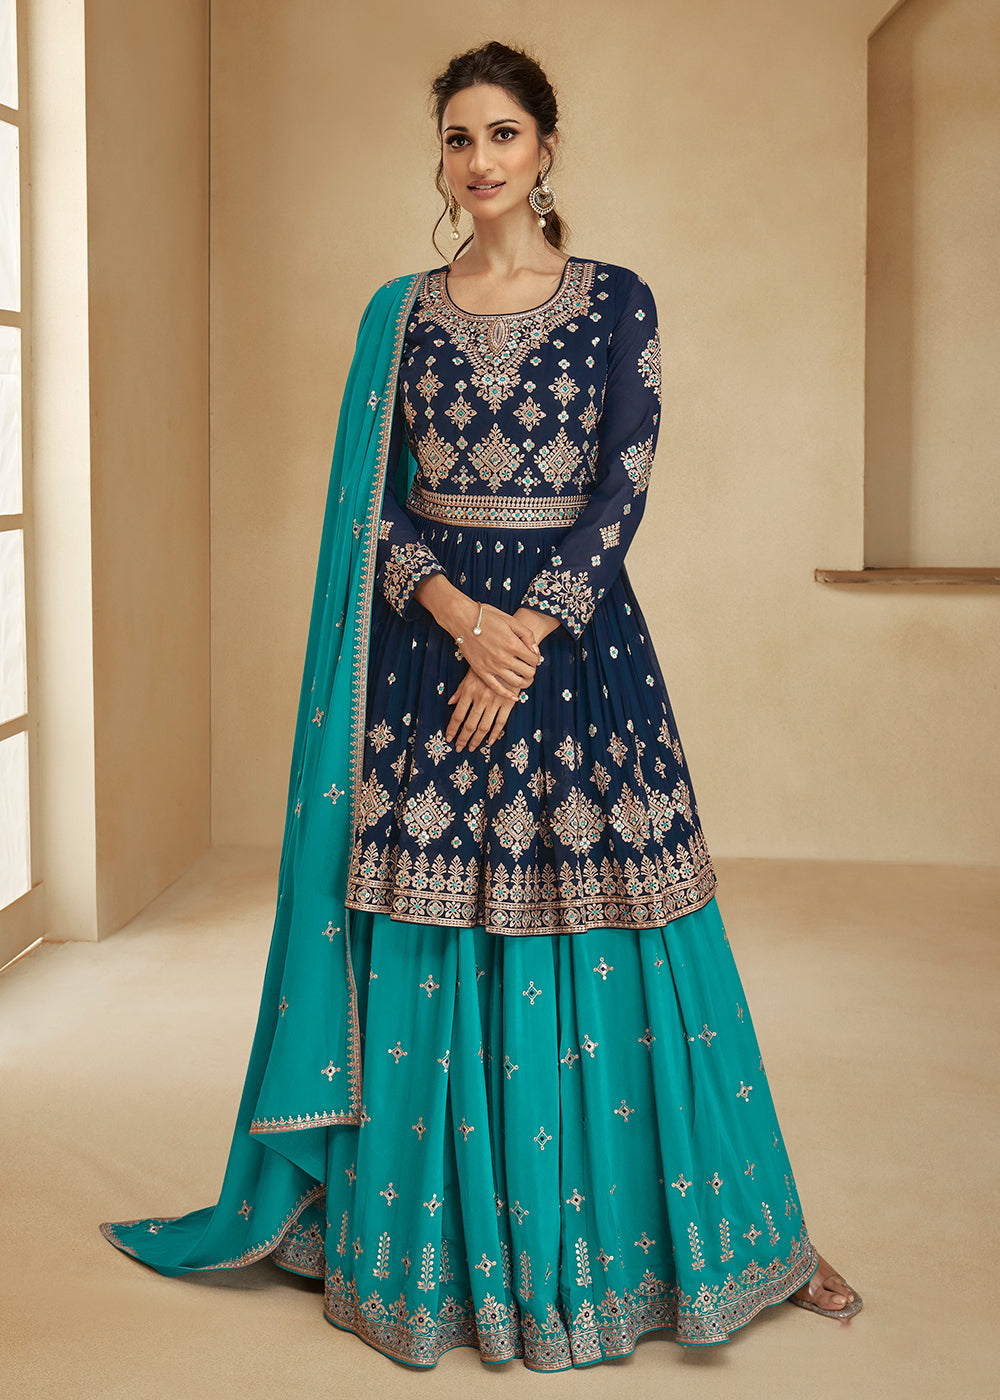 Buy Now Blue & Turquoise Sharara Top Style Lehenga Anarkali Online in USA, UK, Australia, New Zealand, Canada & Worldwide at Empress Clothing. 